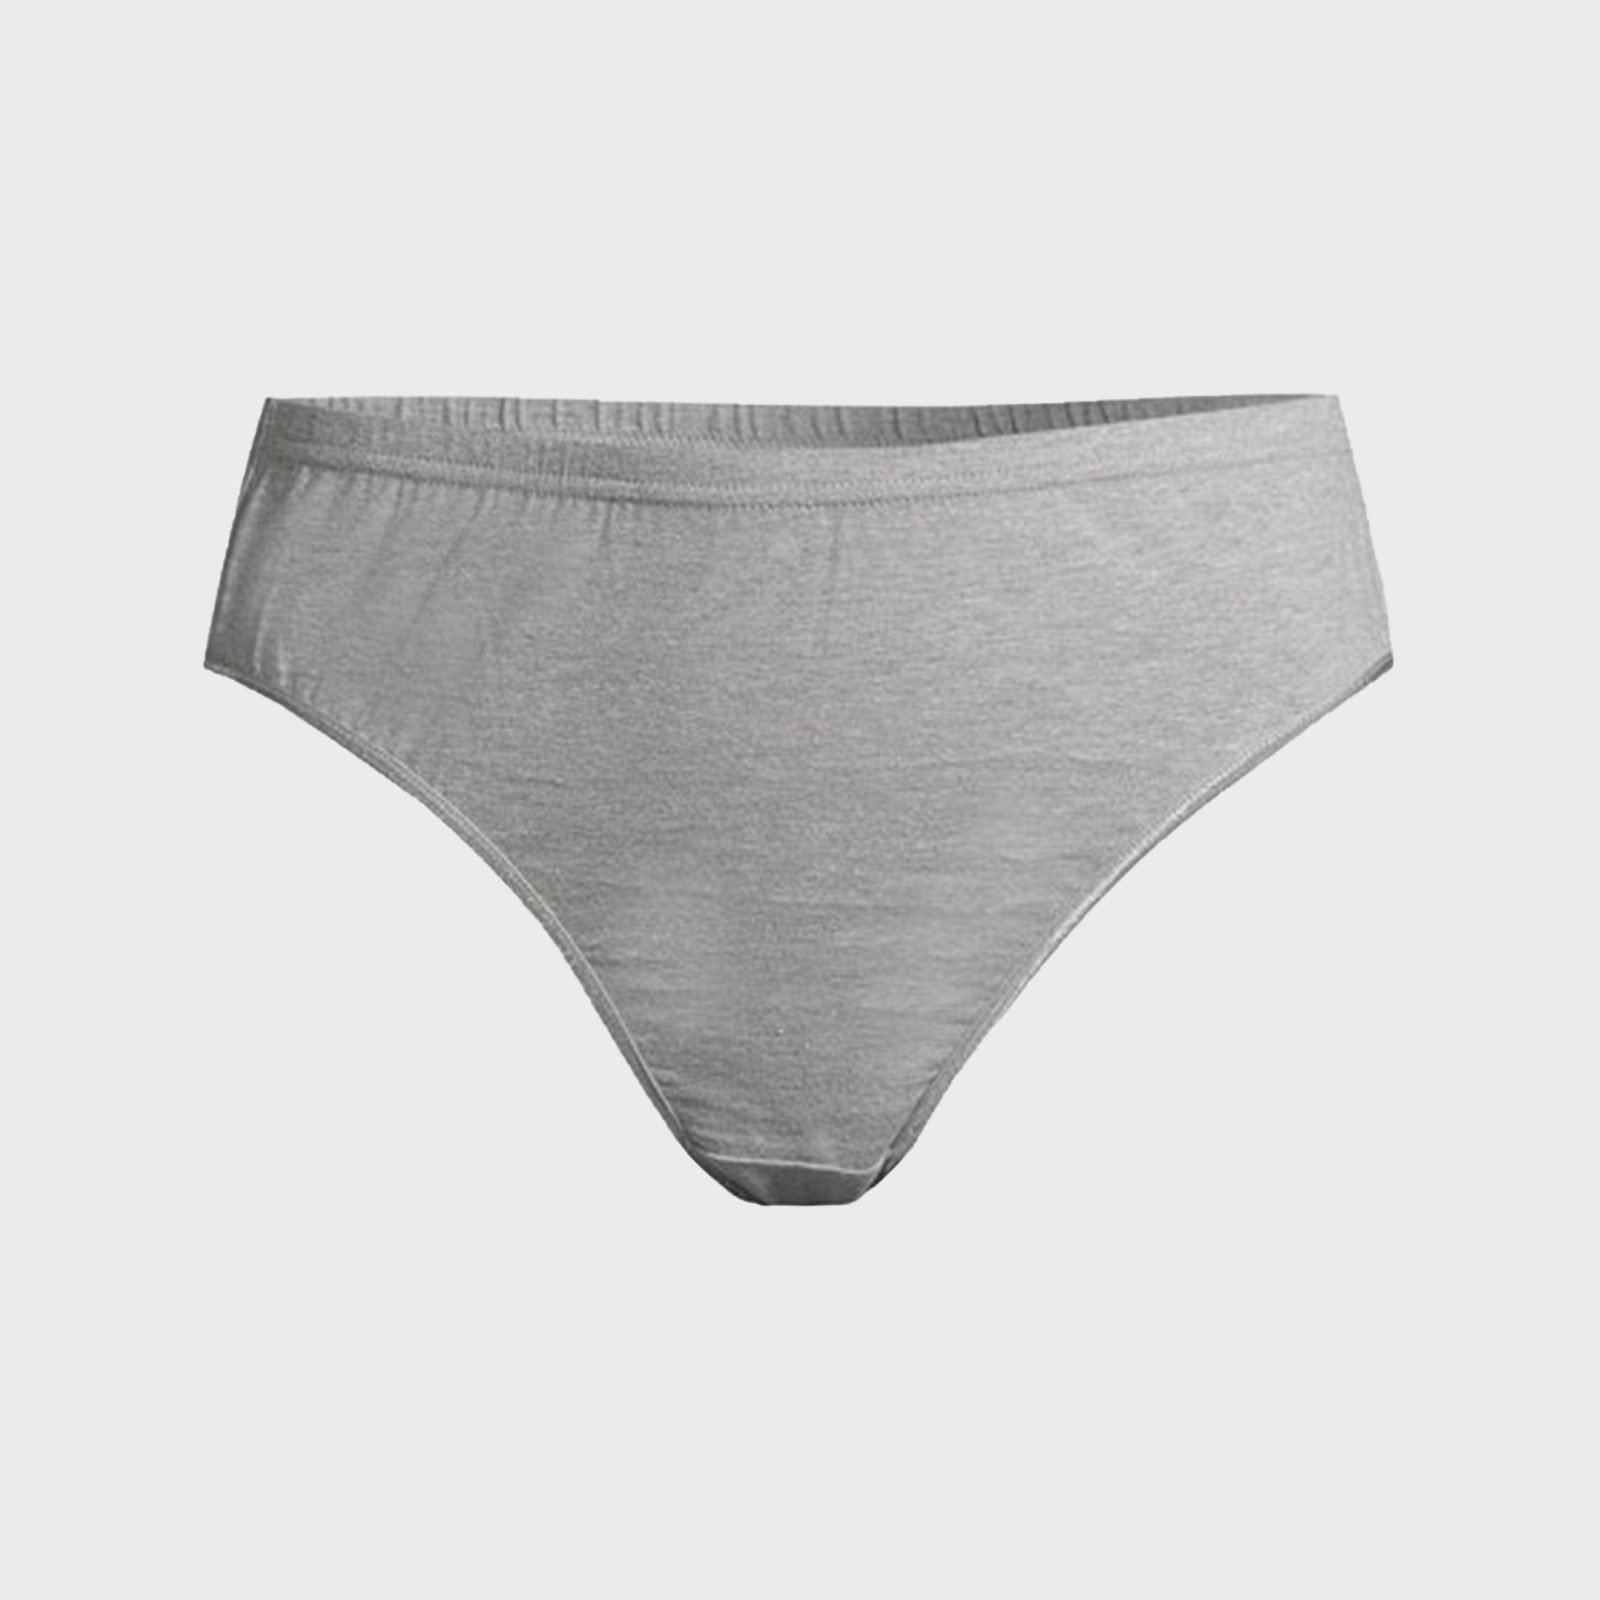 LEEy-world Seamless Underwear for Women Women's High Waisted Cotton  Underwear Soft Breathable Panties Stretch Briefs Regular & Plus Size White,M